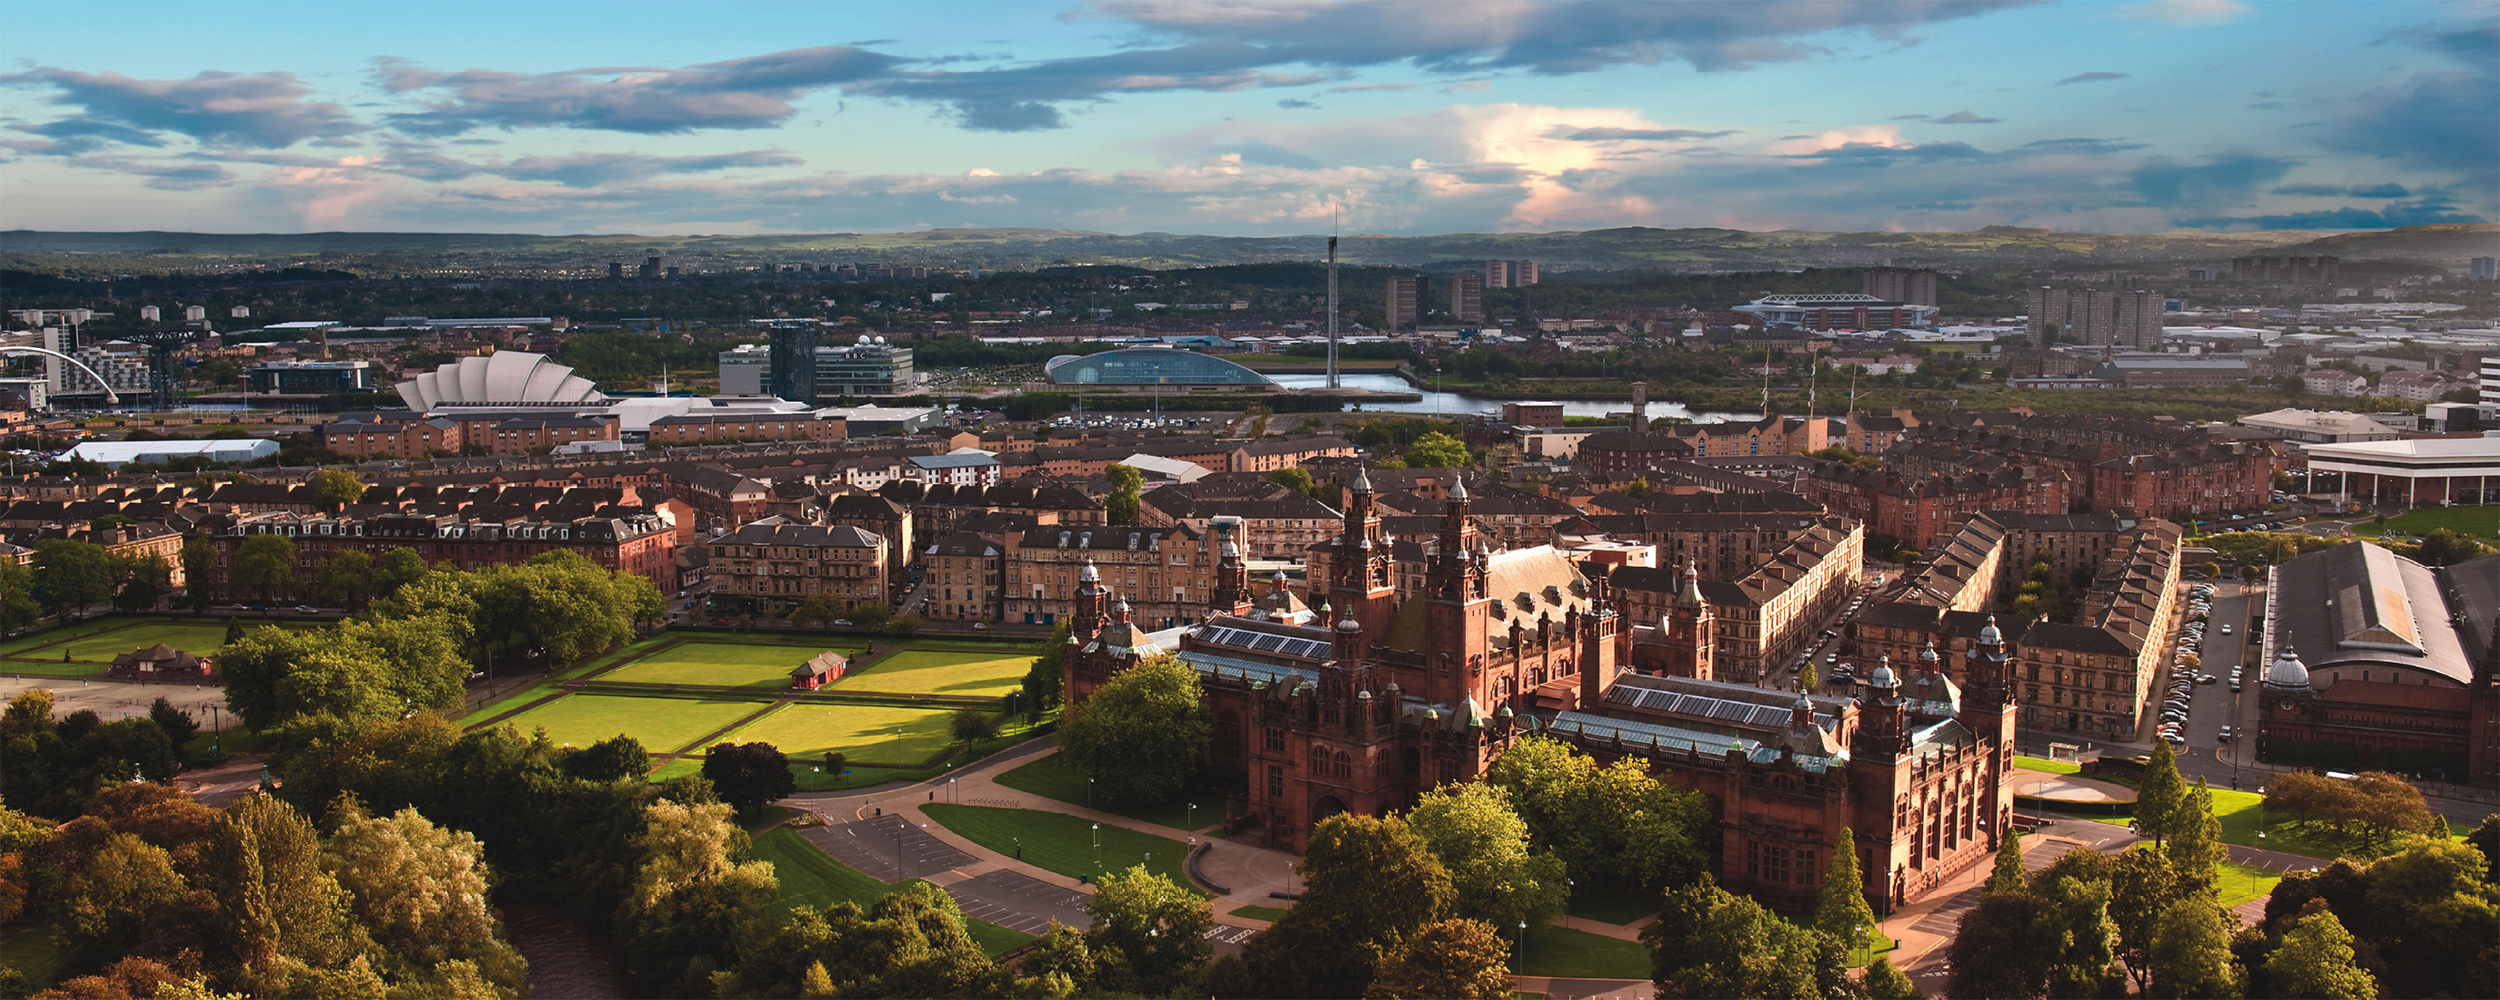 Glasgow city scape panoramic scene